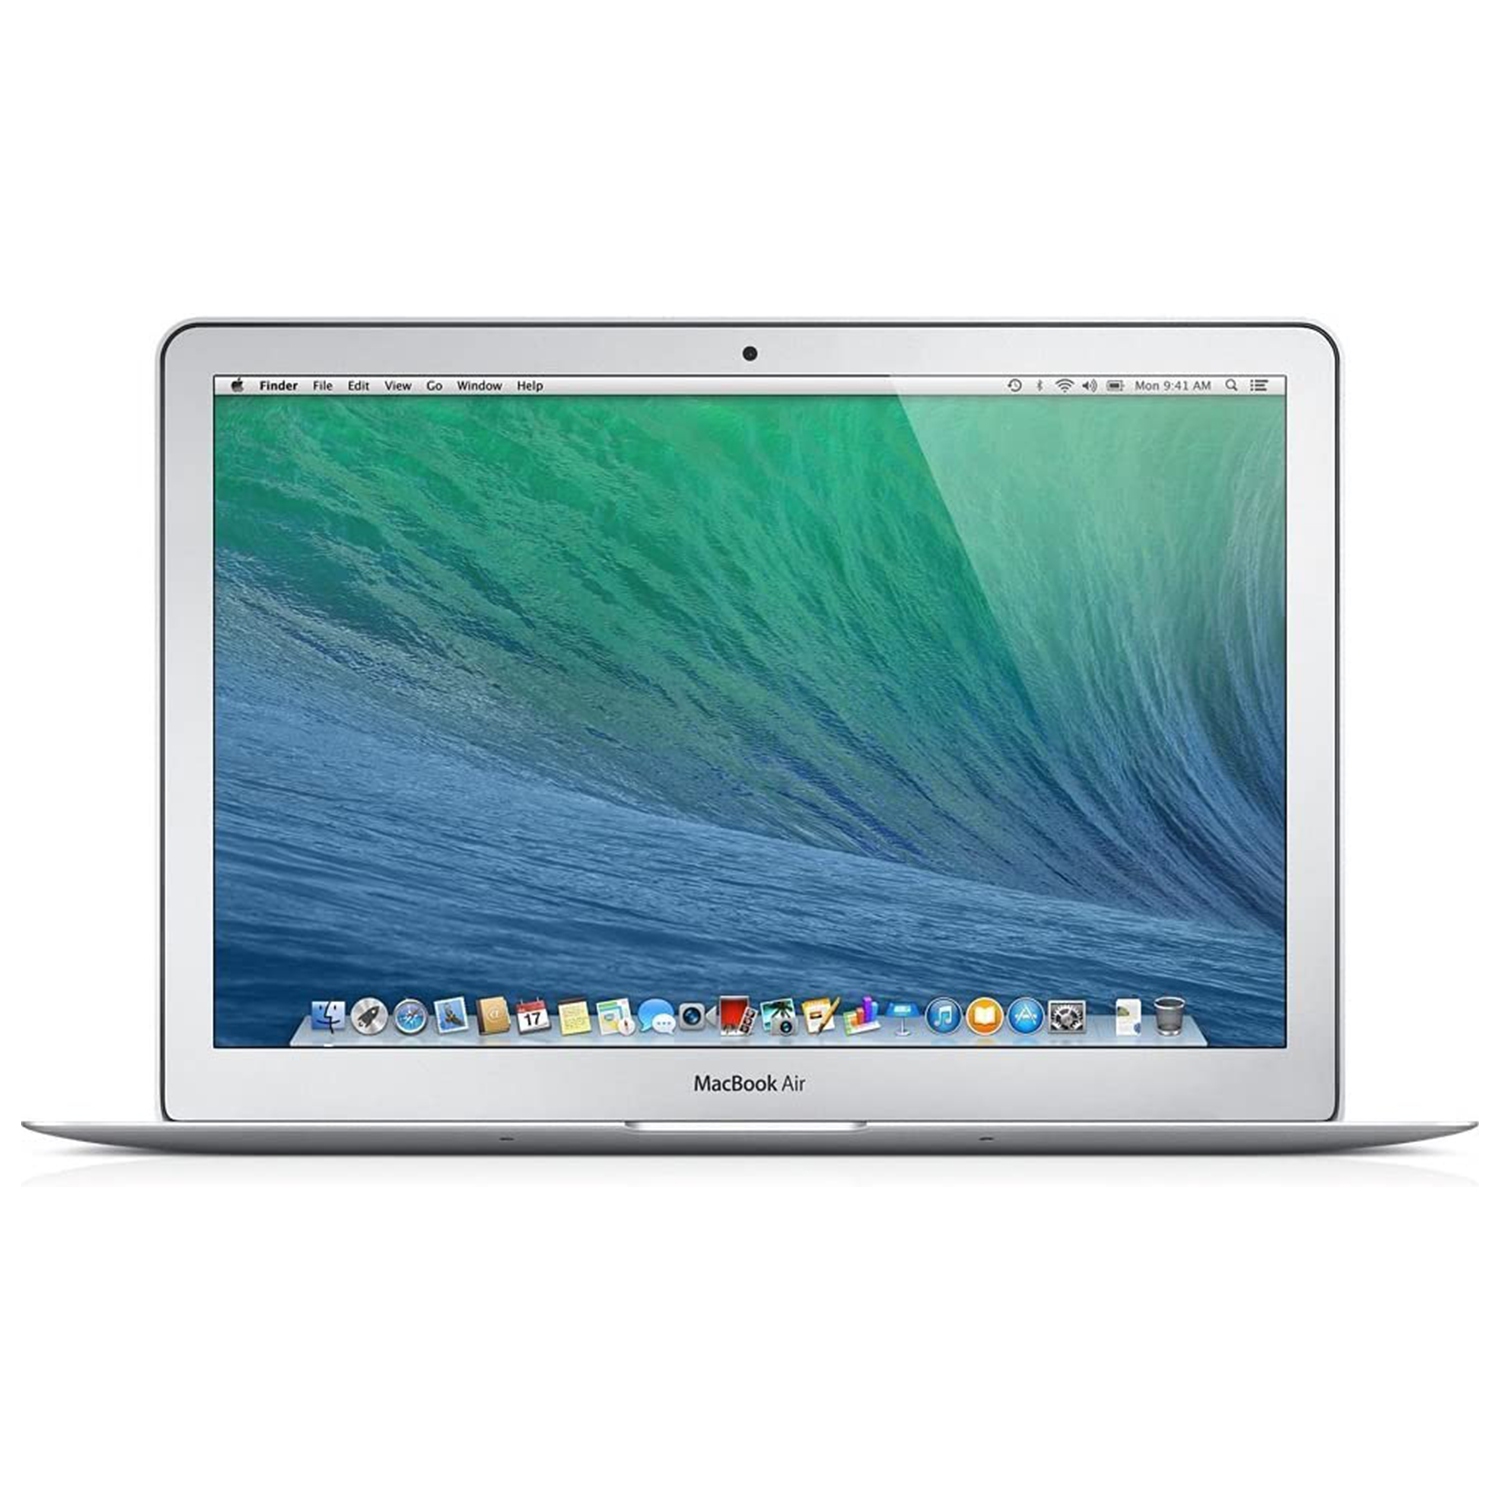 (Refurbished Fair) - Apple MacBook Air 13.3 inch Laptop | Intel Dual Core i5 Procesoor | 4GB RAM 128GB SSD | Early 2015 Model - MacOS Monterey MJVE2LL/A